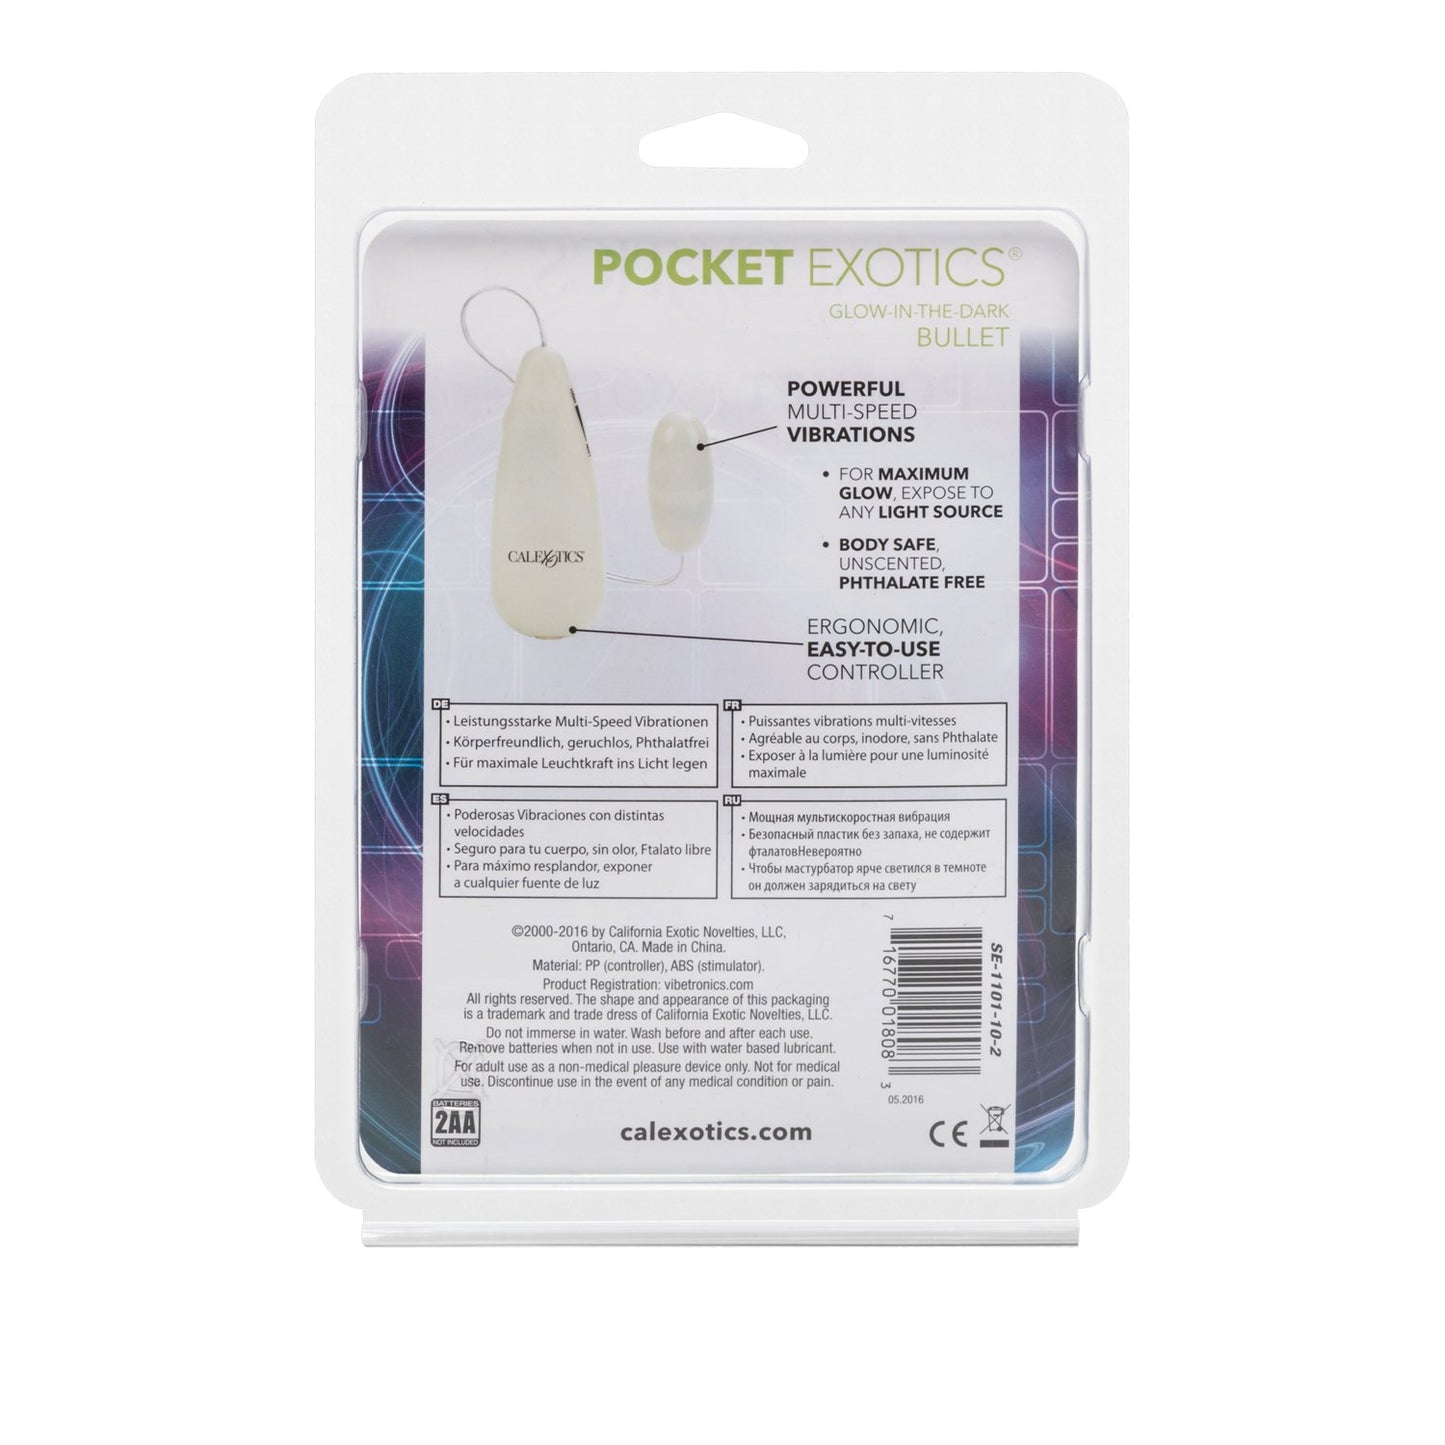 Pocket Exotics Glow-in-the-Dark Bullet